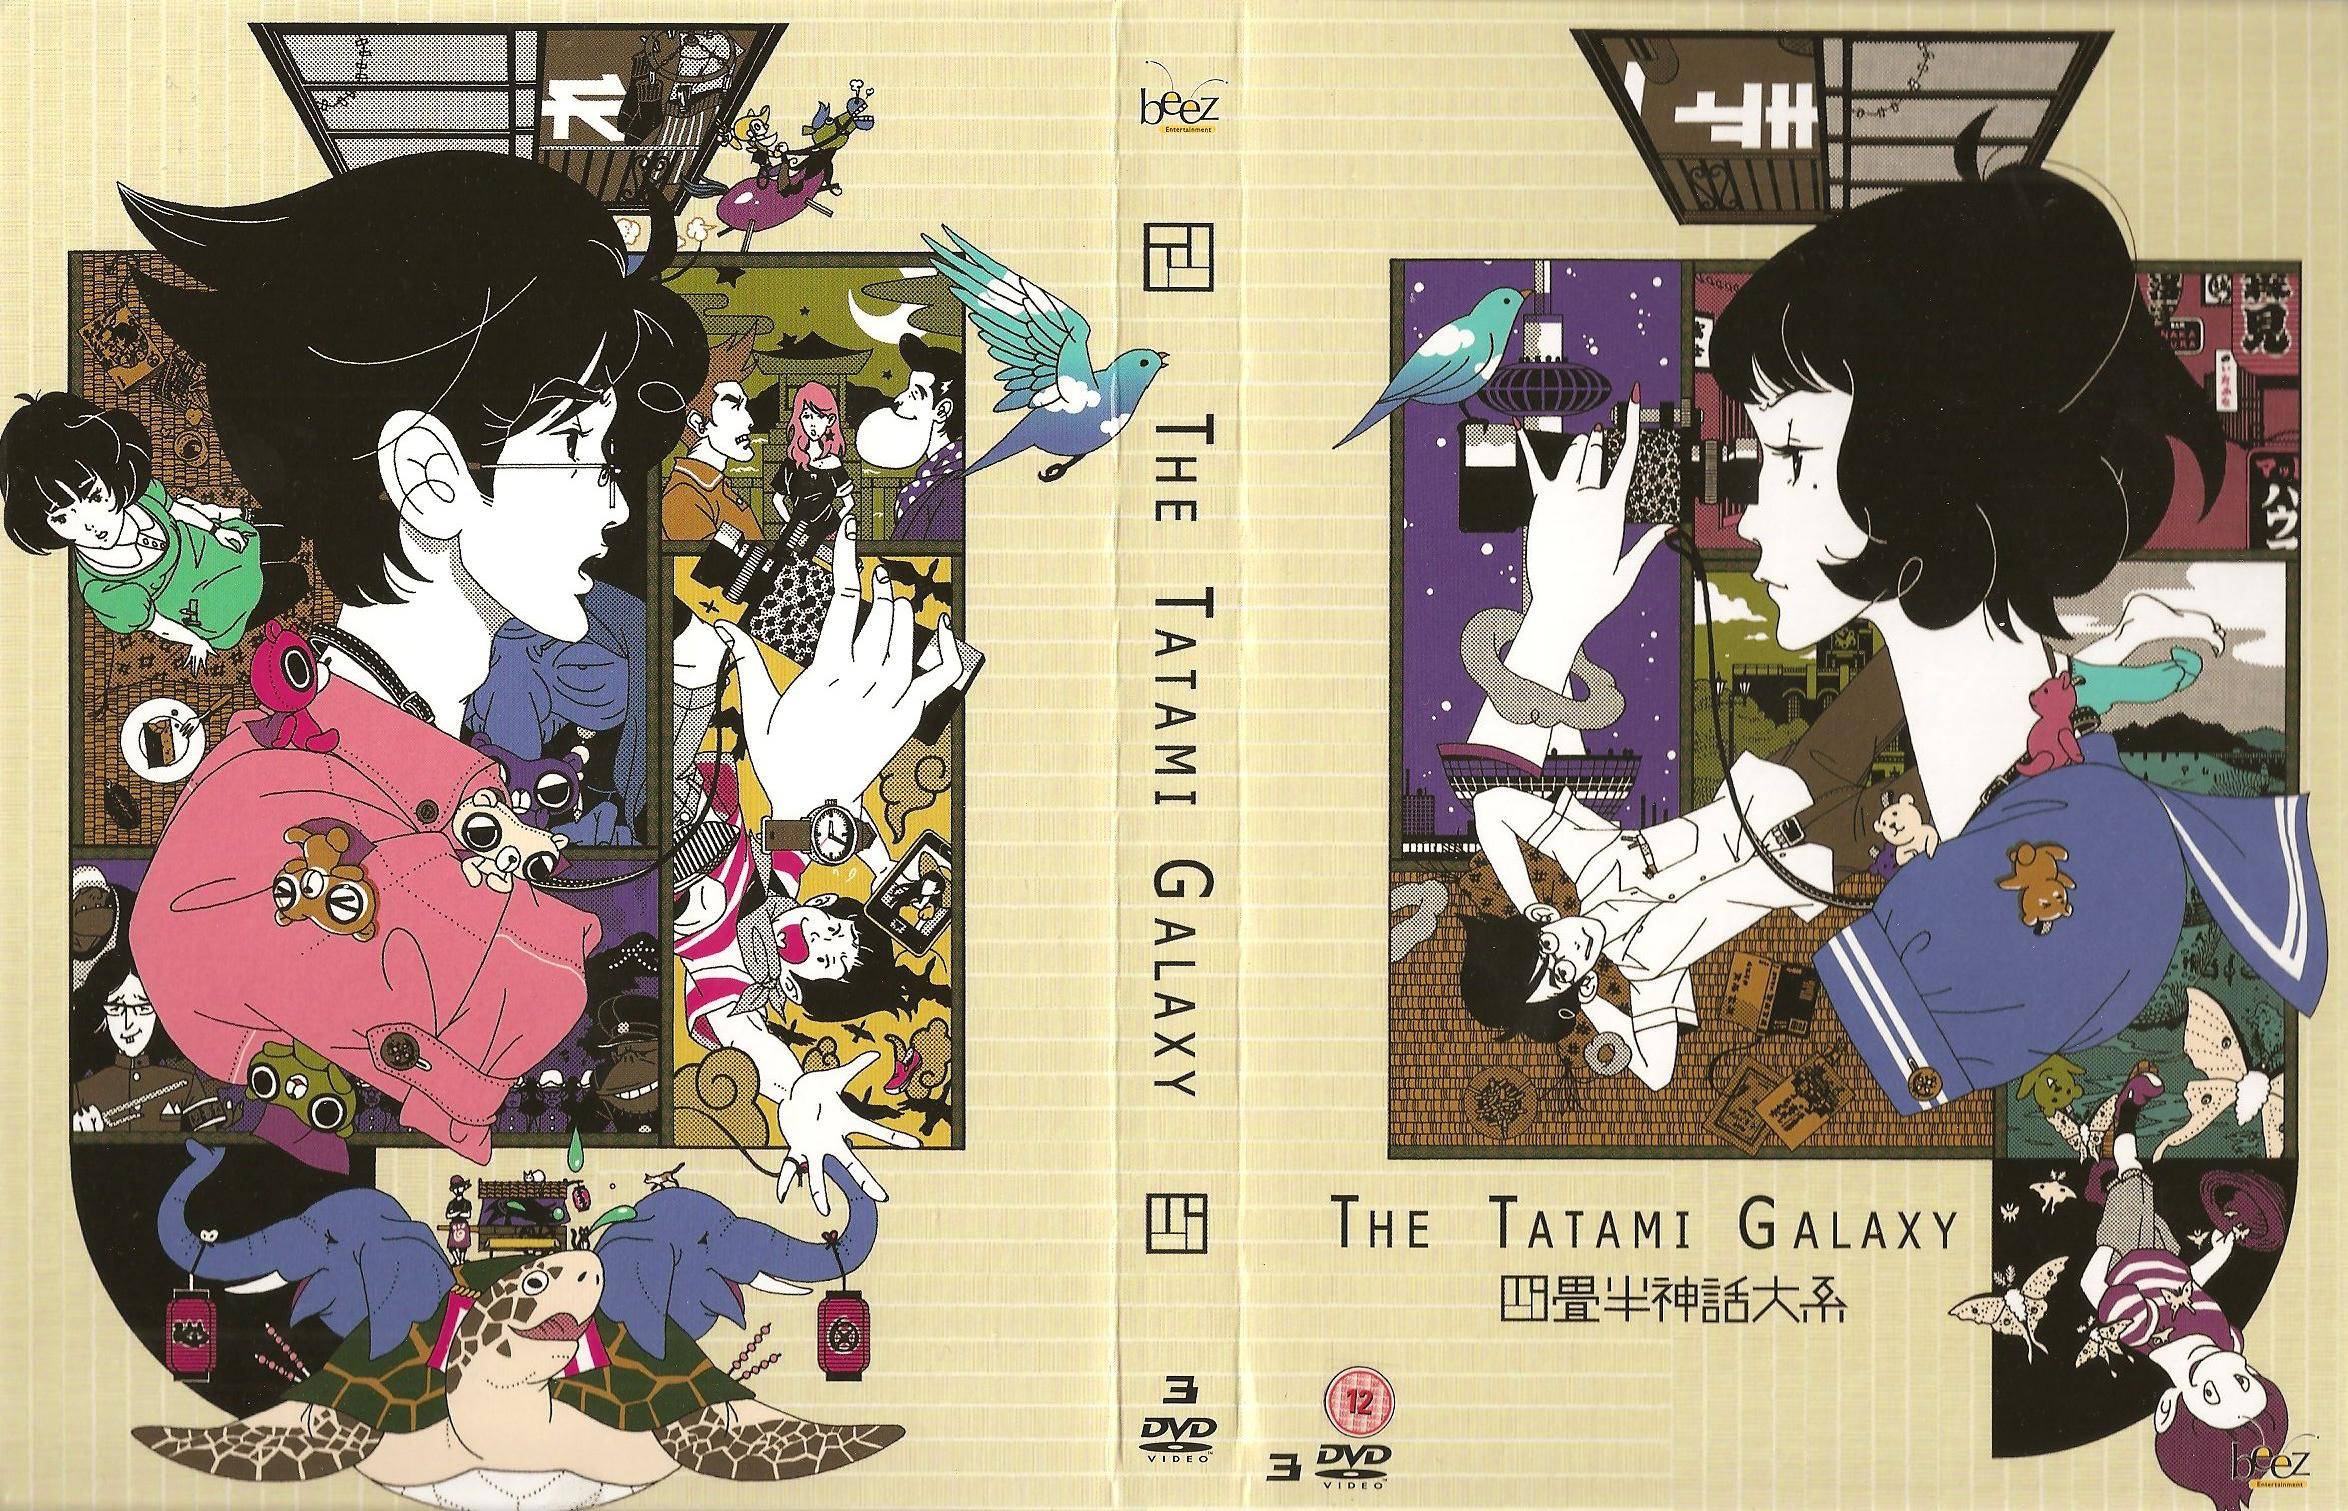 The Tatami Galaxy #7